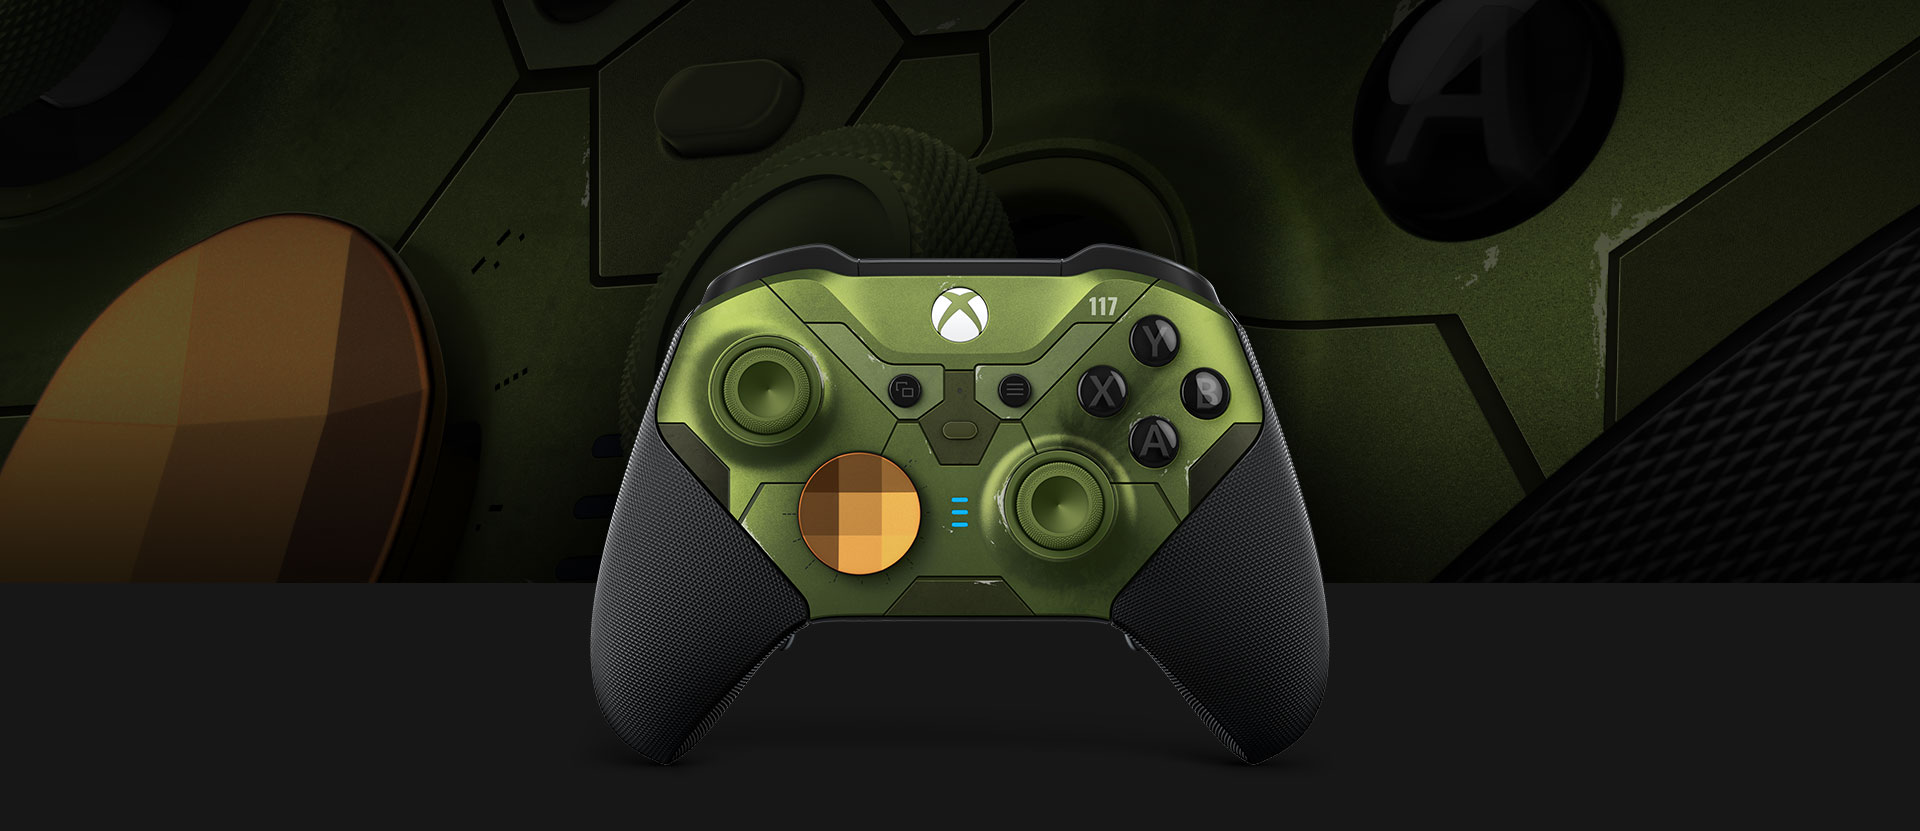 Xbox Elite 無線控制器 Series 2 的正面圖與背景中的控制器特寫